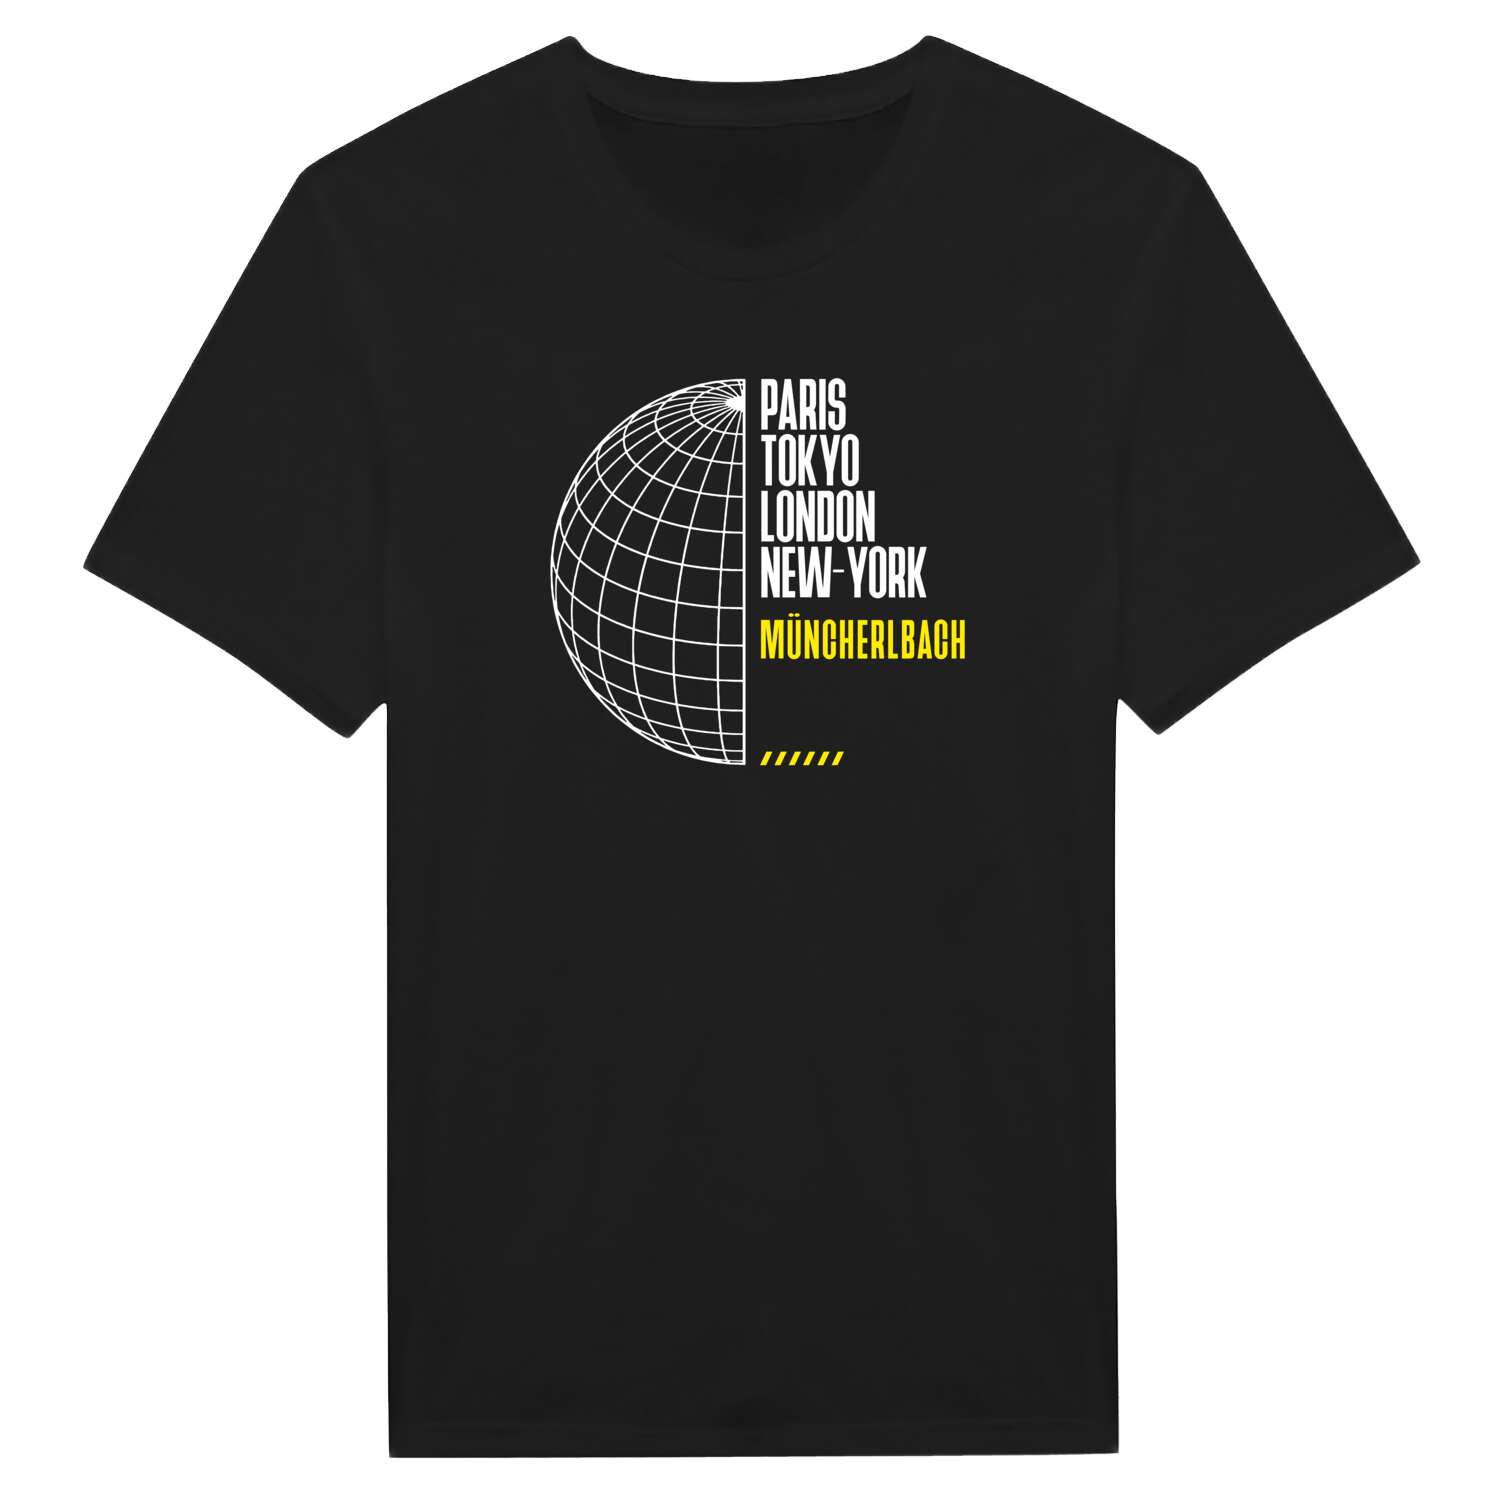 Müncherlbach T-Shirt »Paris Tokyo London«